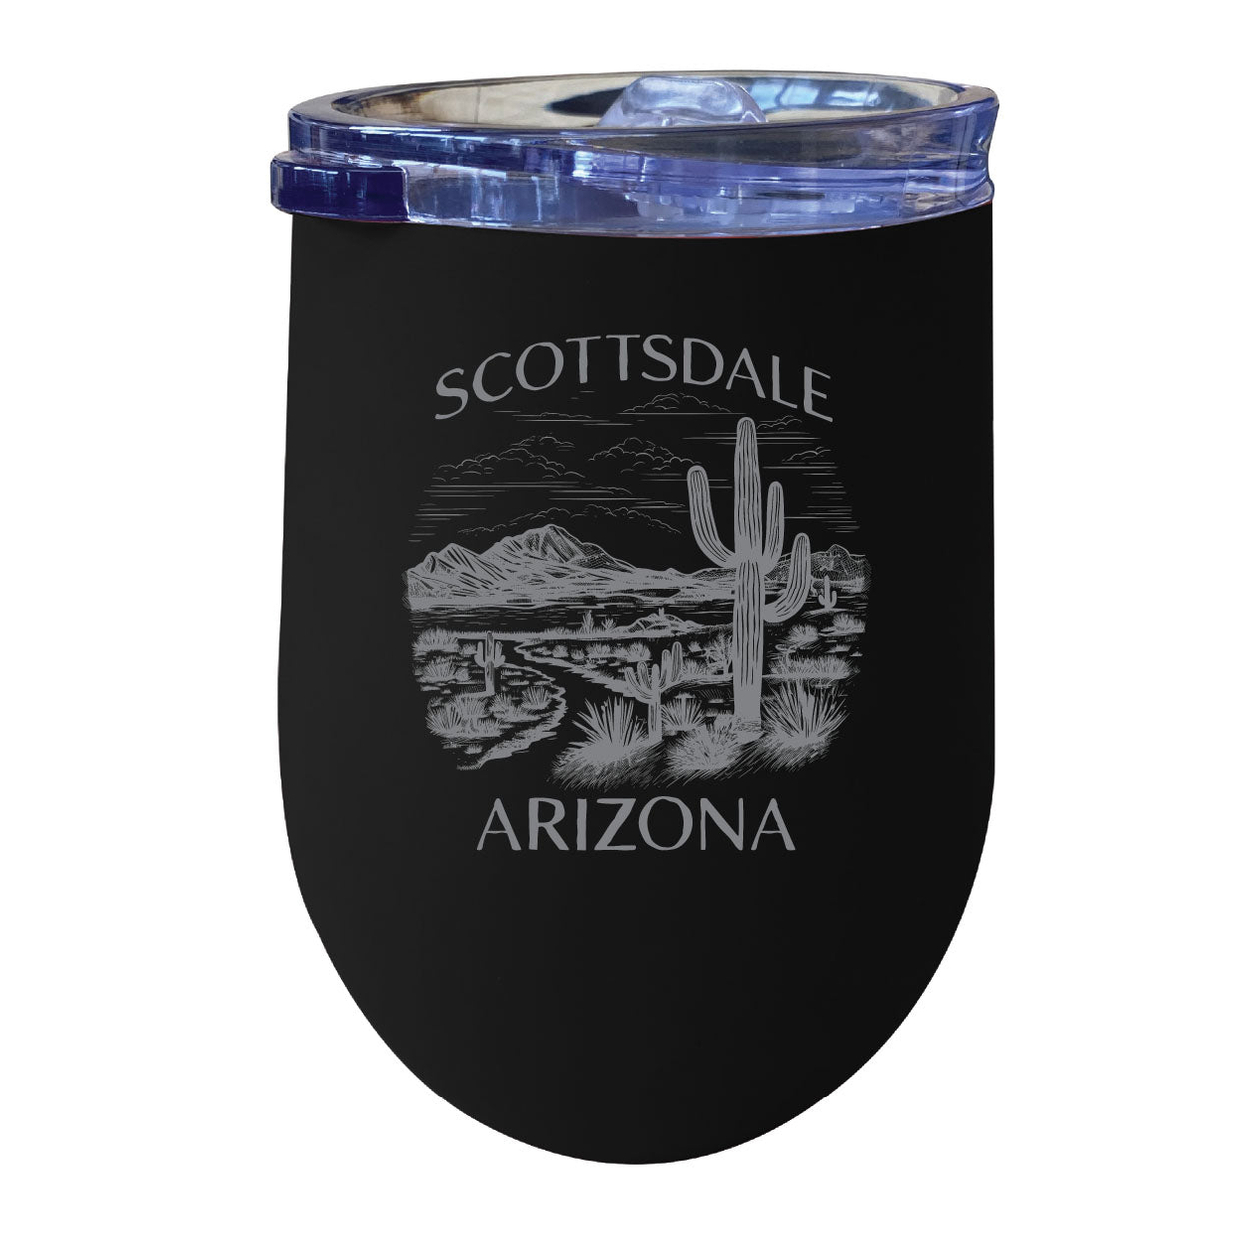 Scottsdale Arizona Souvenir 12 Oz Engraved Insulated Wine Stainless Steel Tumbler - Black,,2-Pack